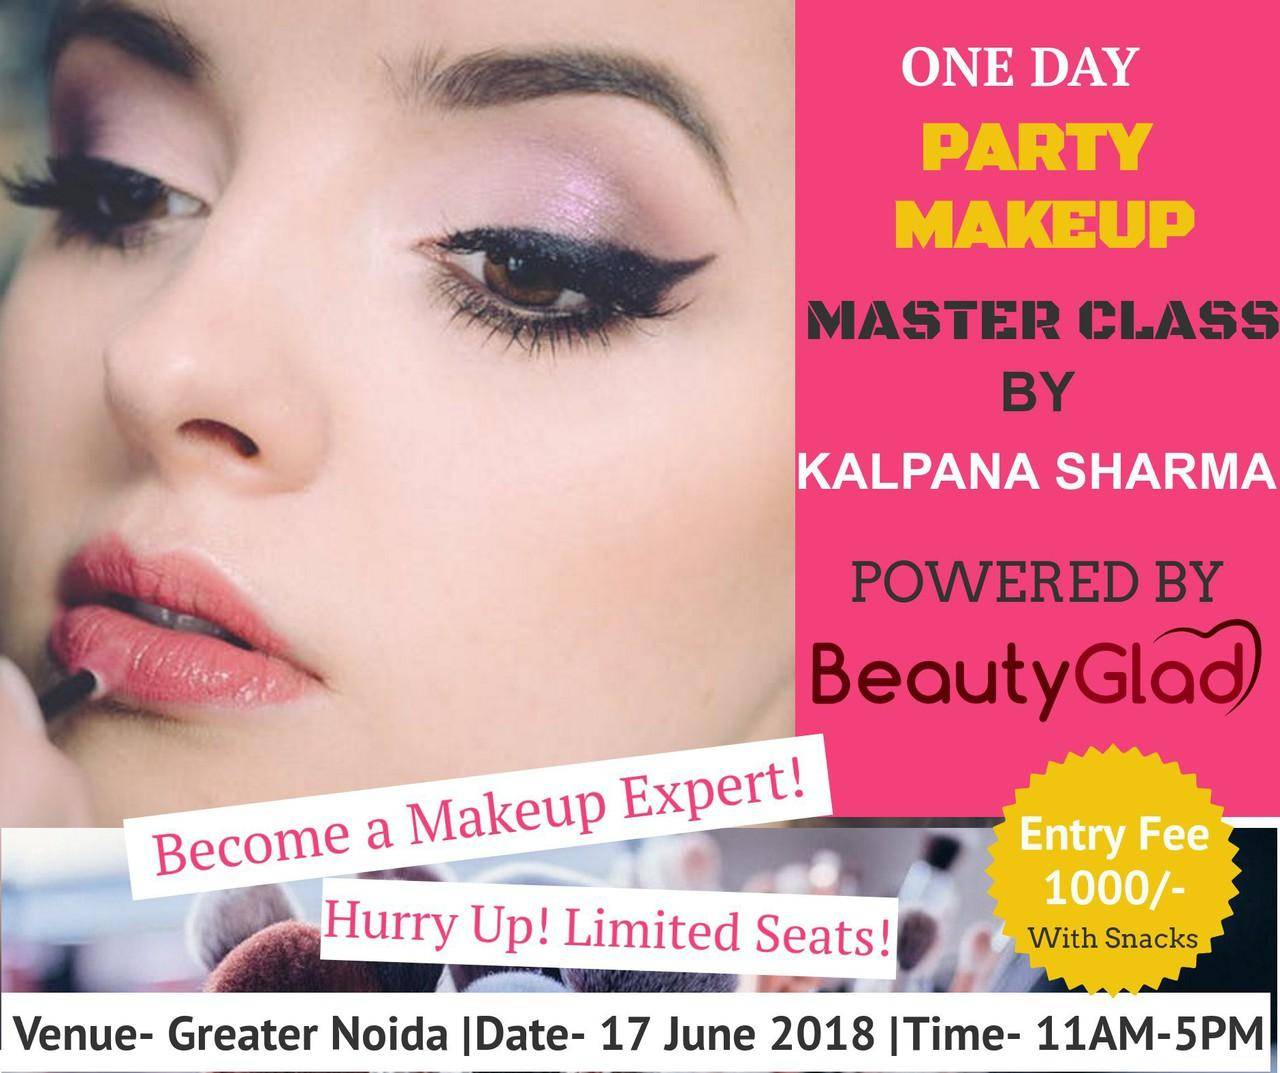 Day Party Eye Makeup 1 Day Party Makeup Workshop Kalpana Sharma At Delhi Events